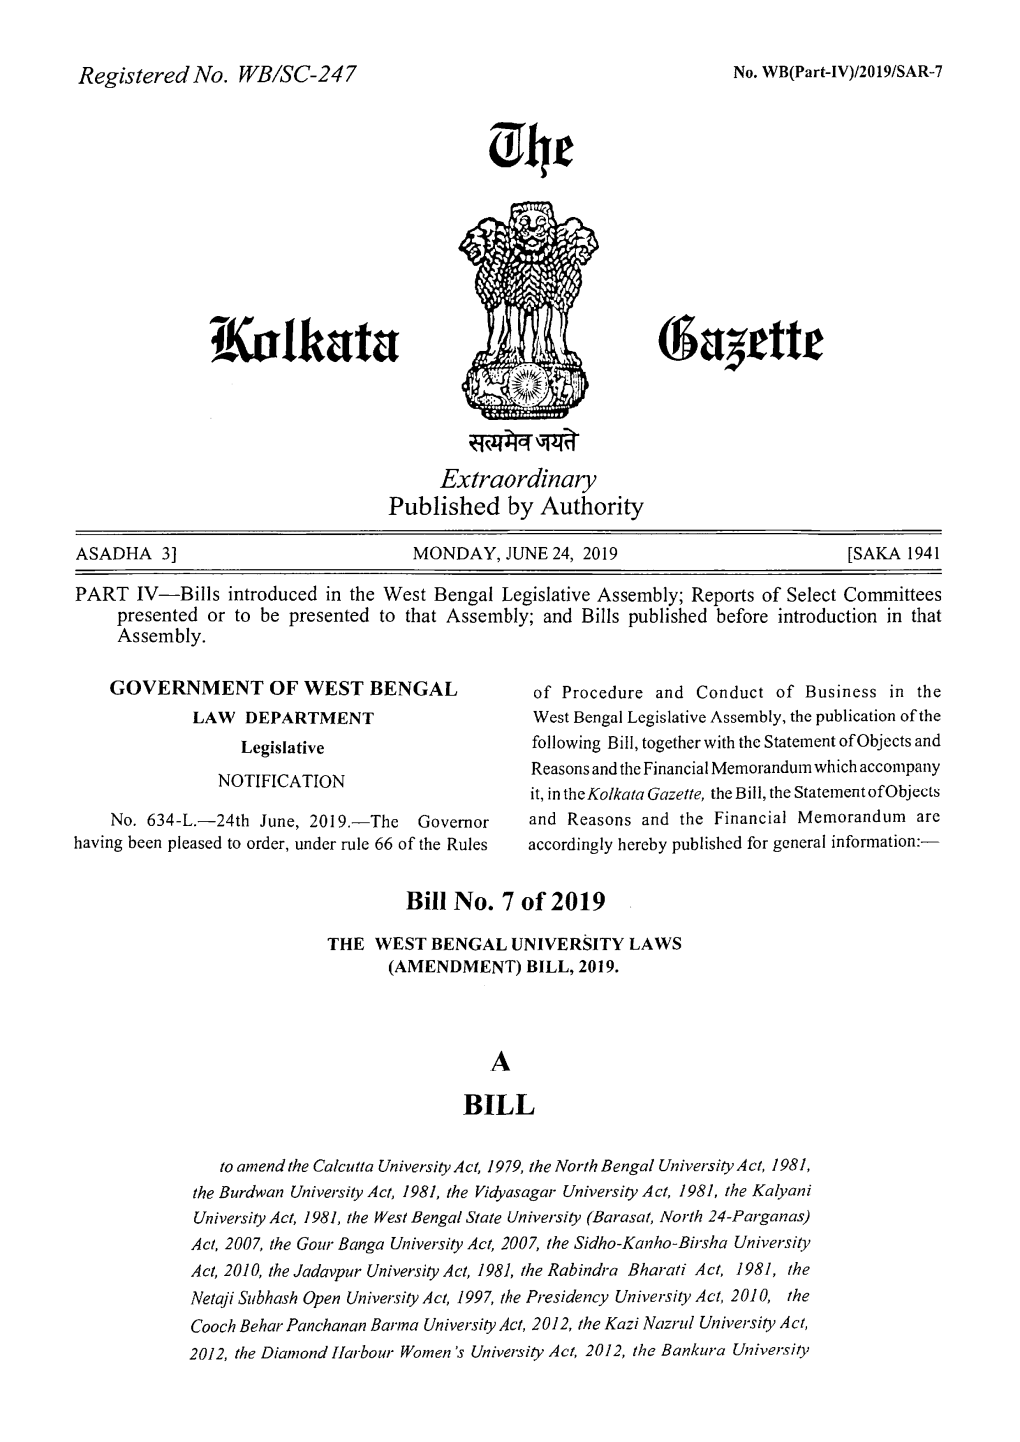 The West Bengal University Laws (Amendment) Bill, 2019